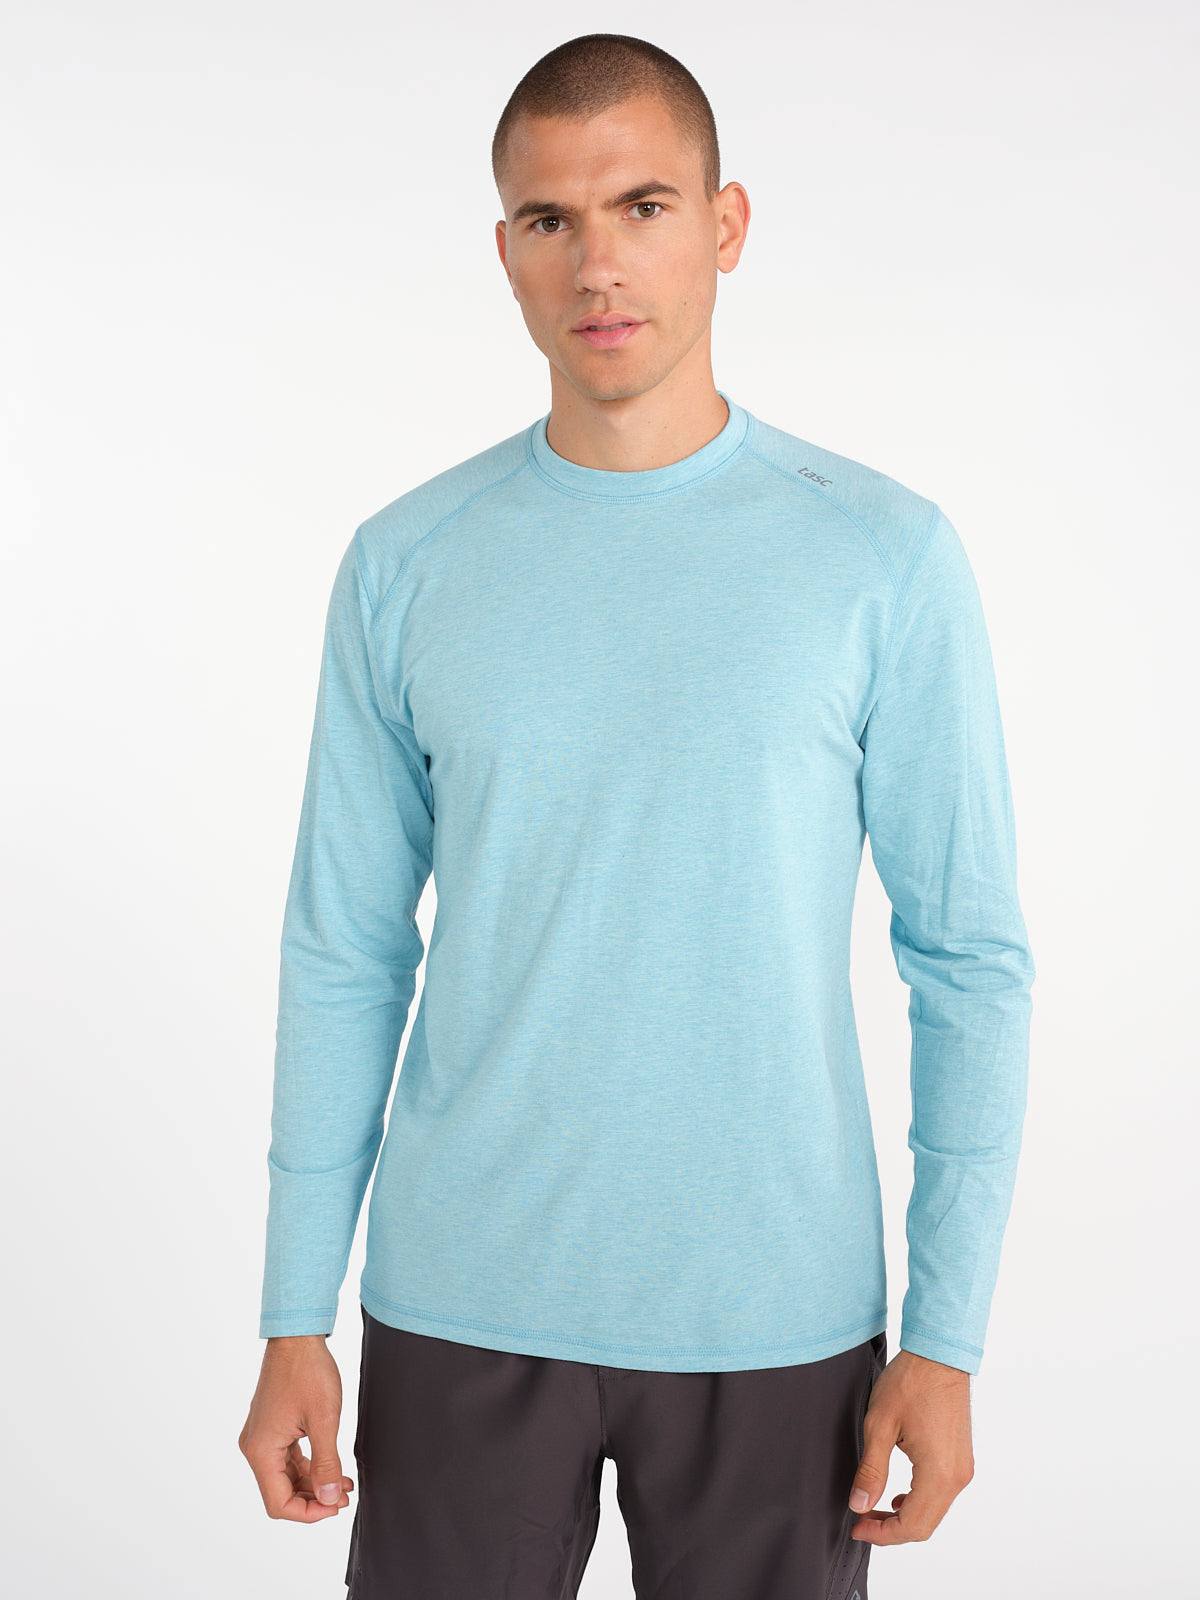 Carrollton Long Sleeve Fitness T-Shirt